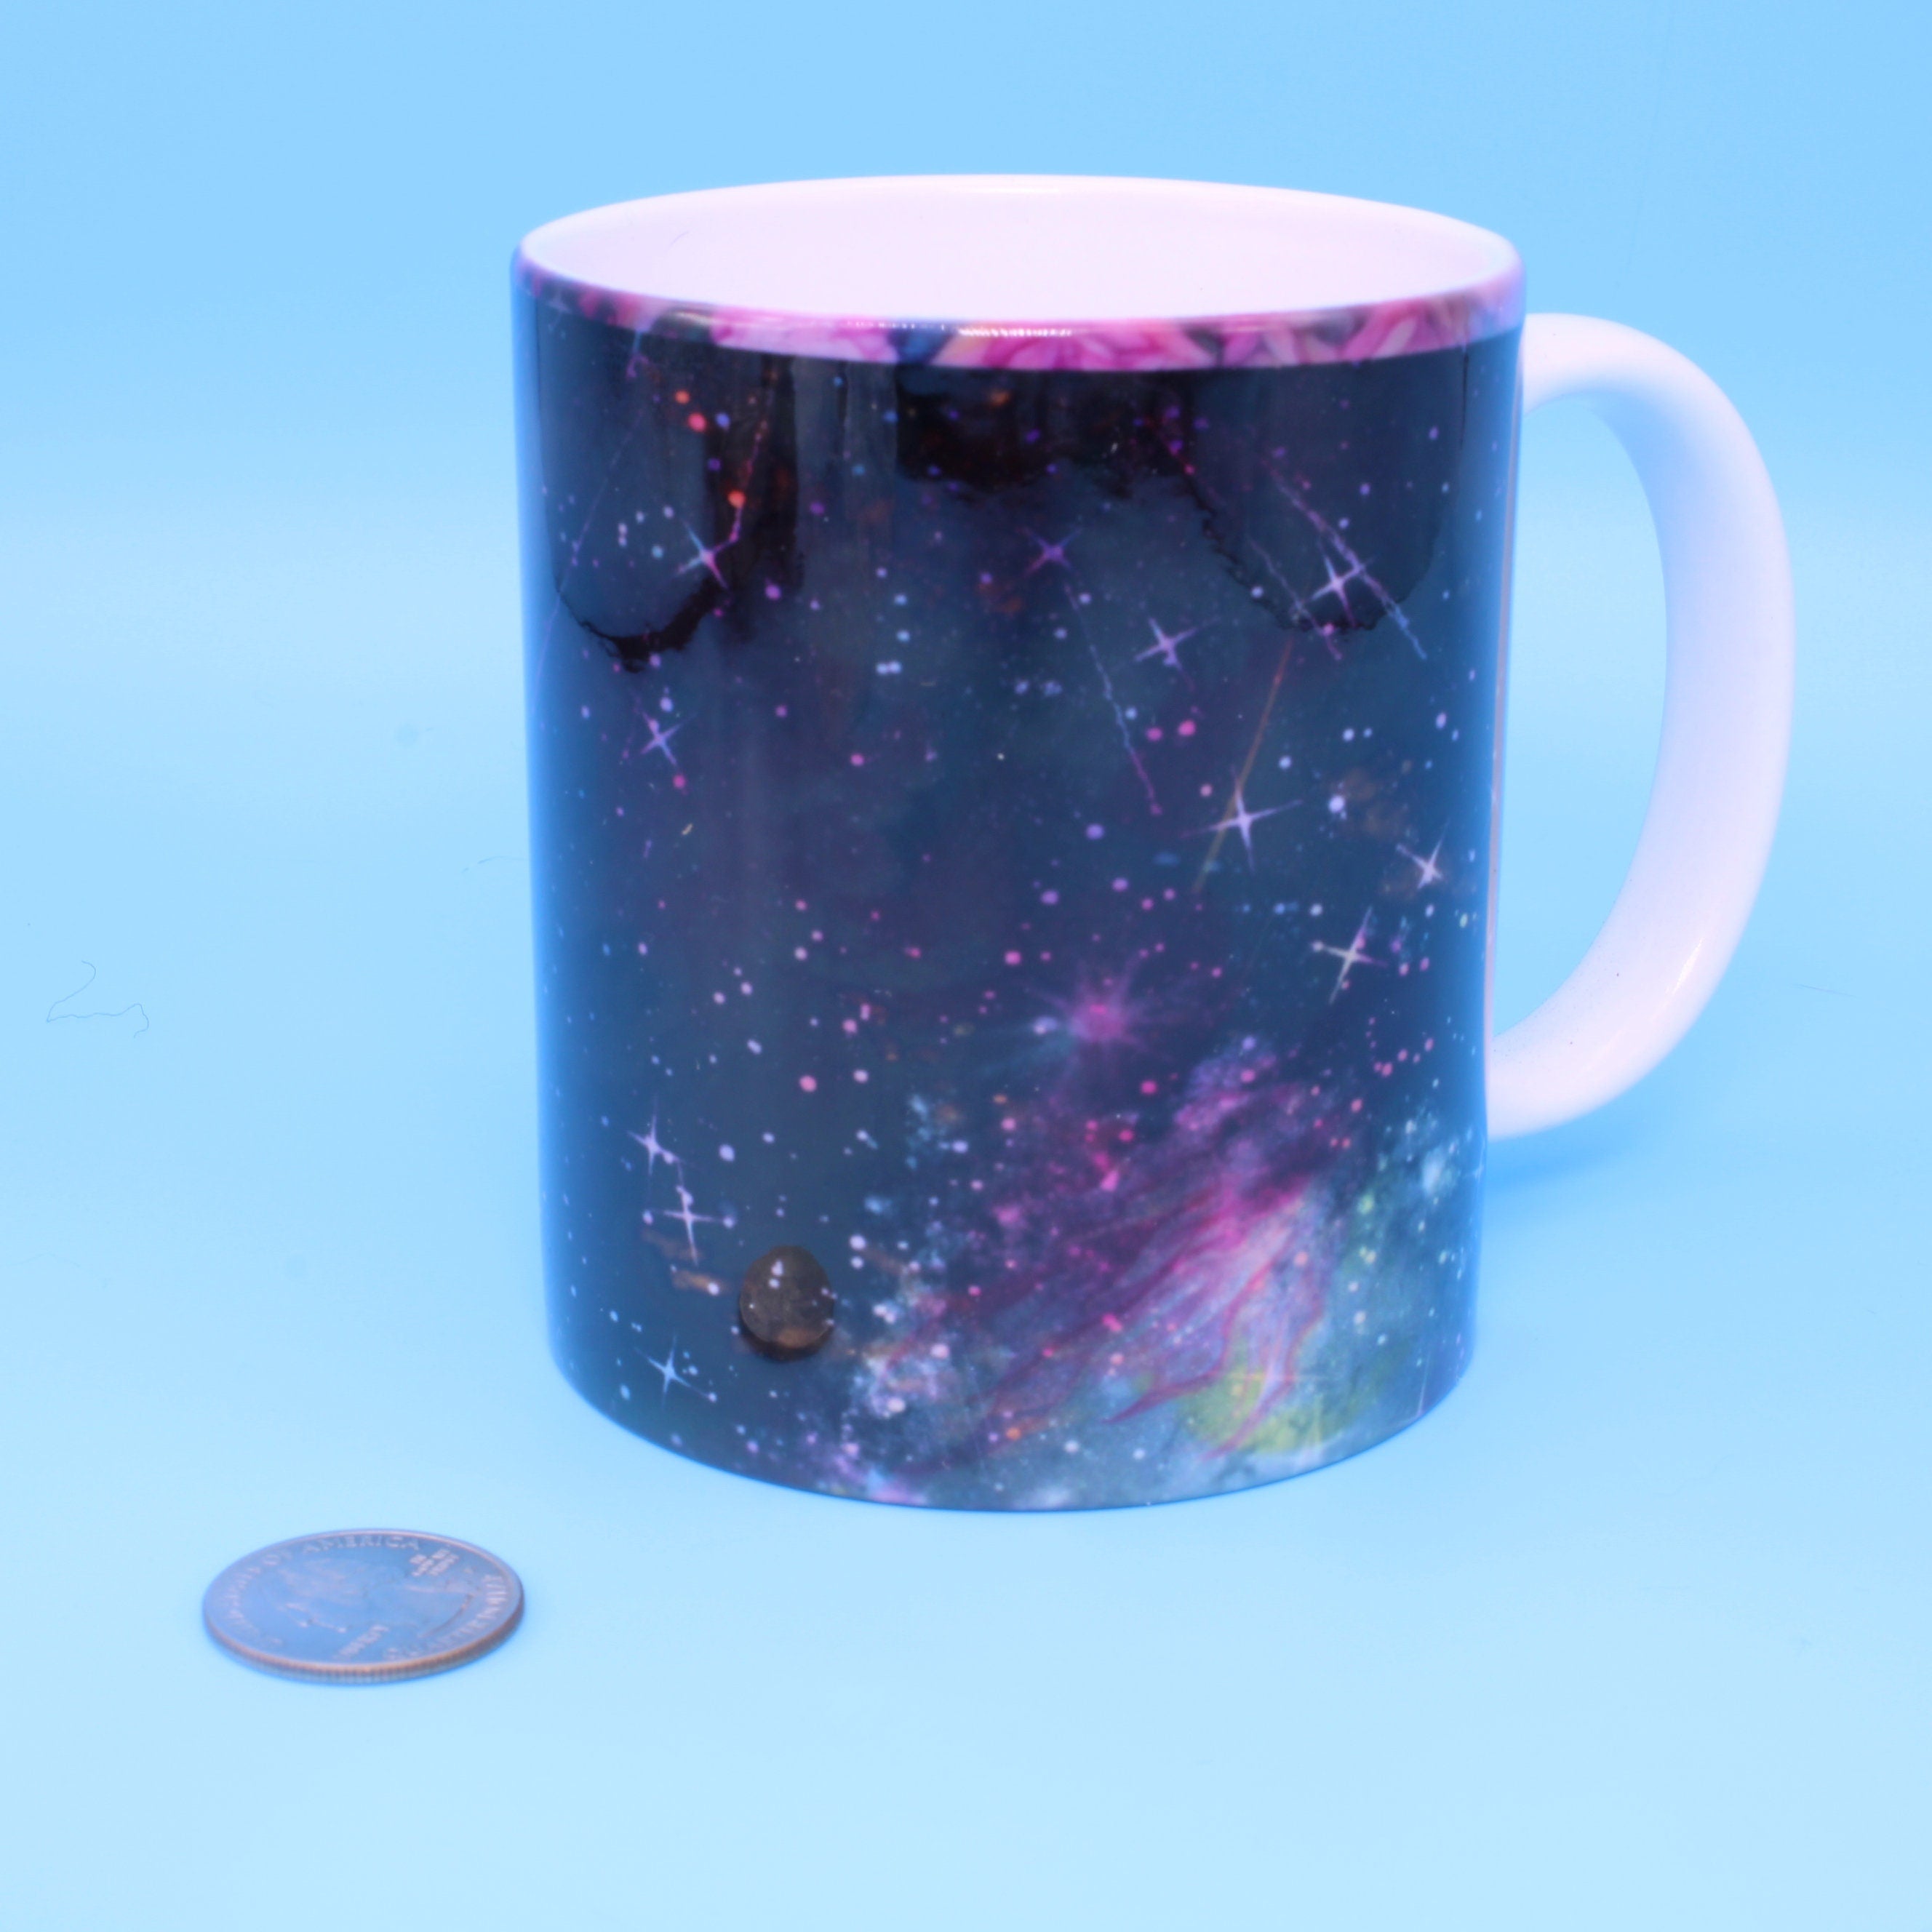 Night Sky Ceramic Mug - Hot chocolate | Coffee | Hot Tea 11 0z. Perfect gift!